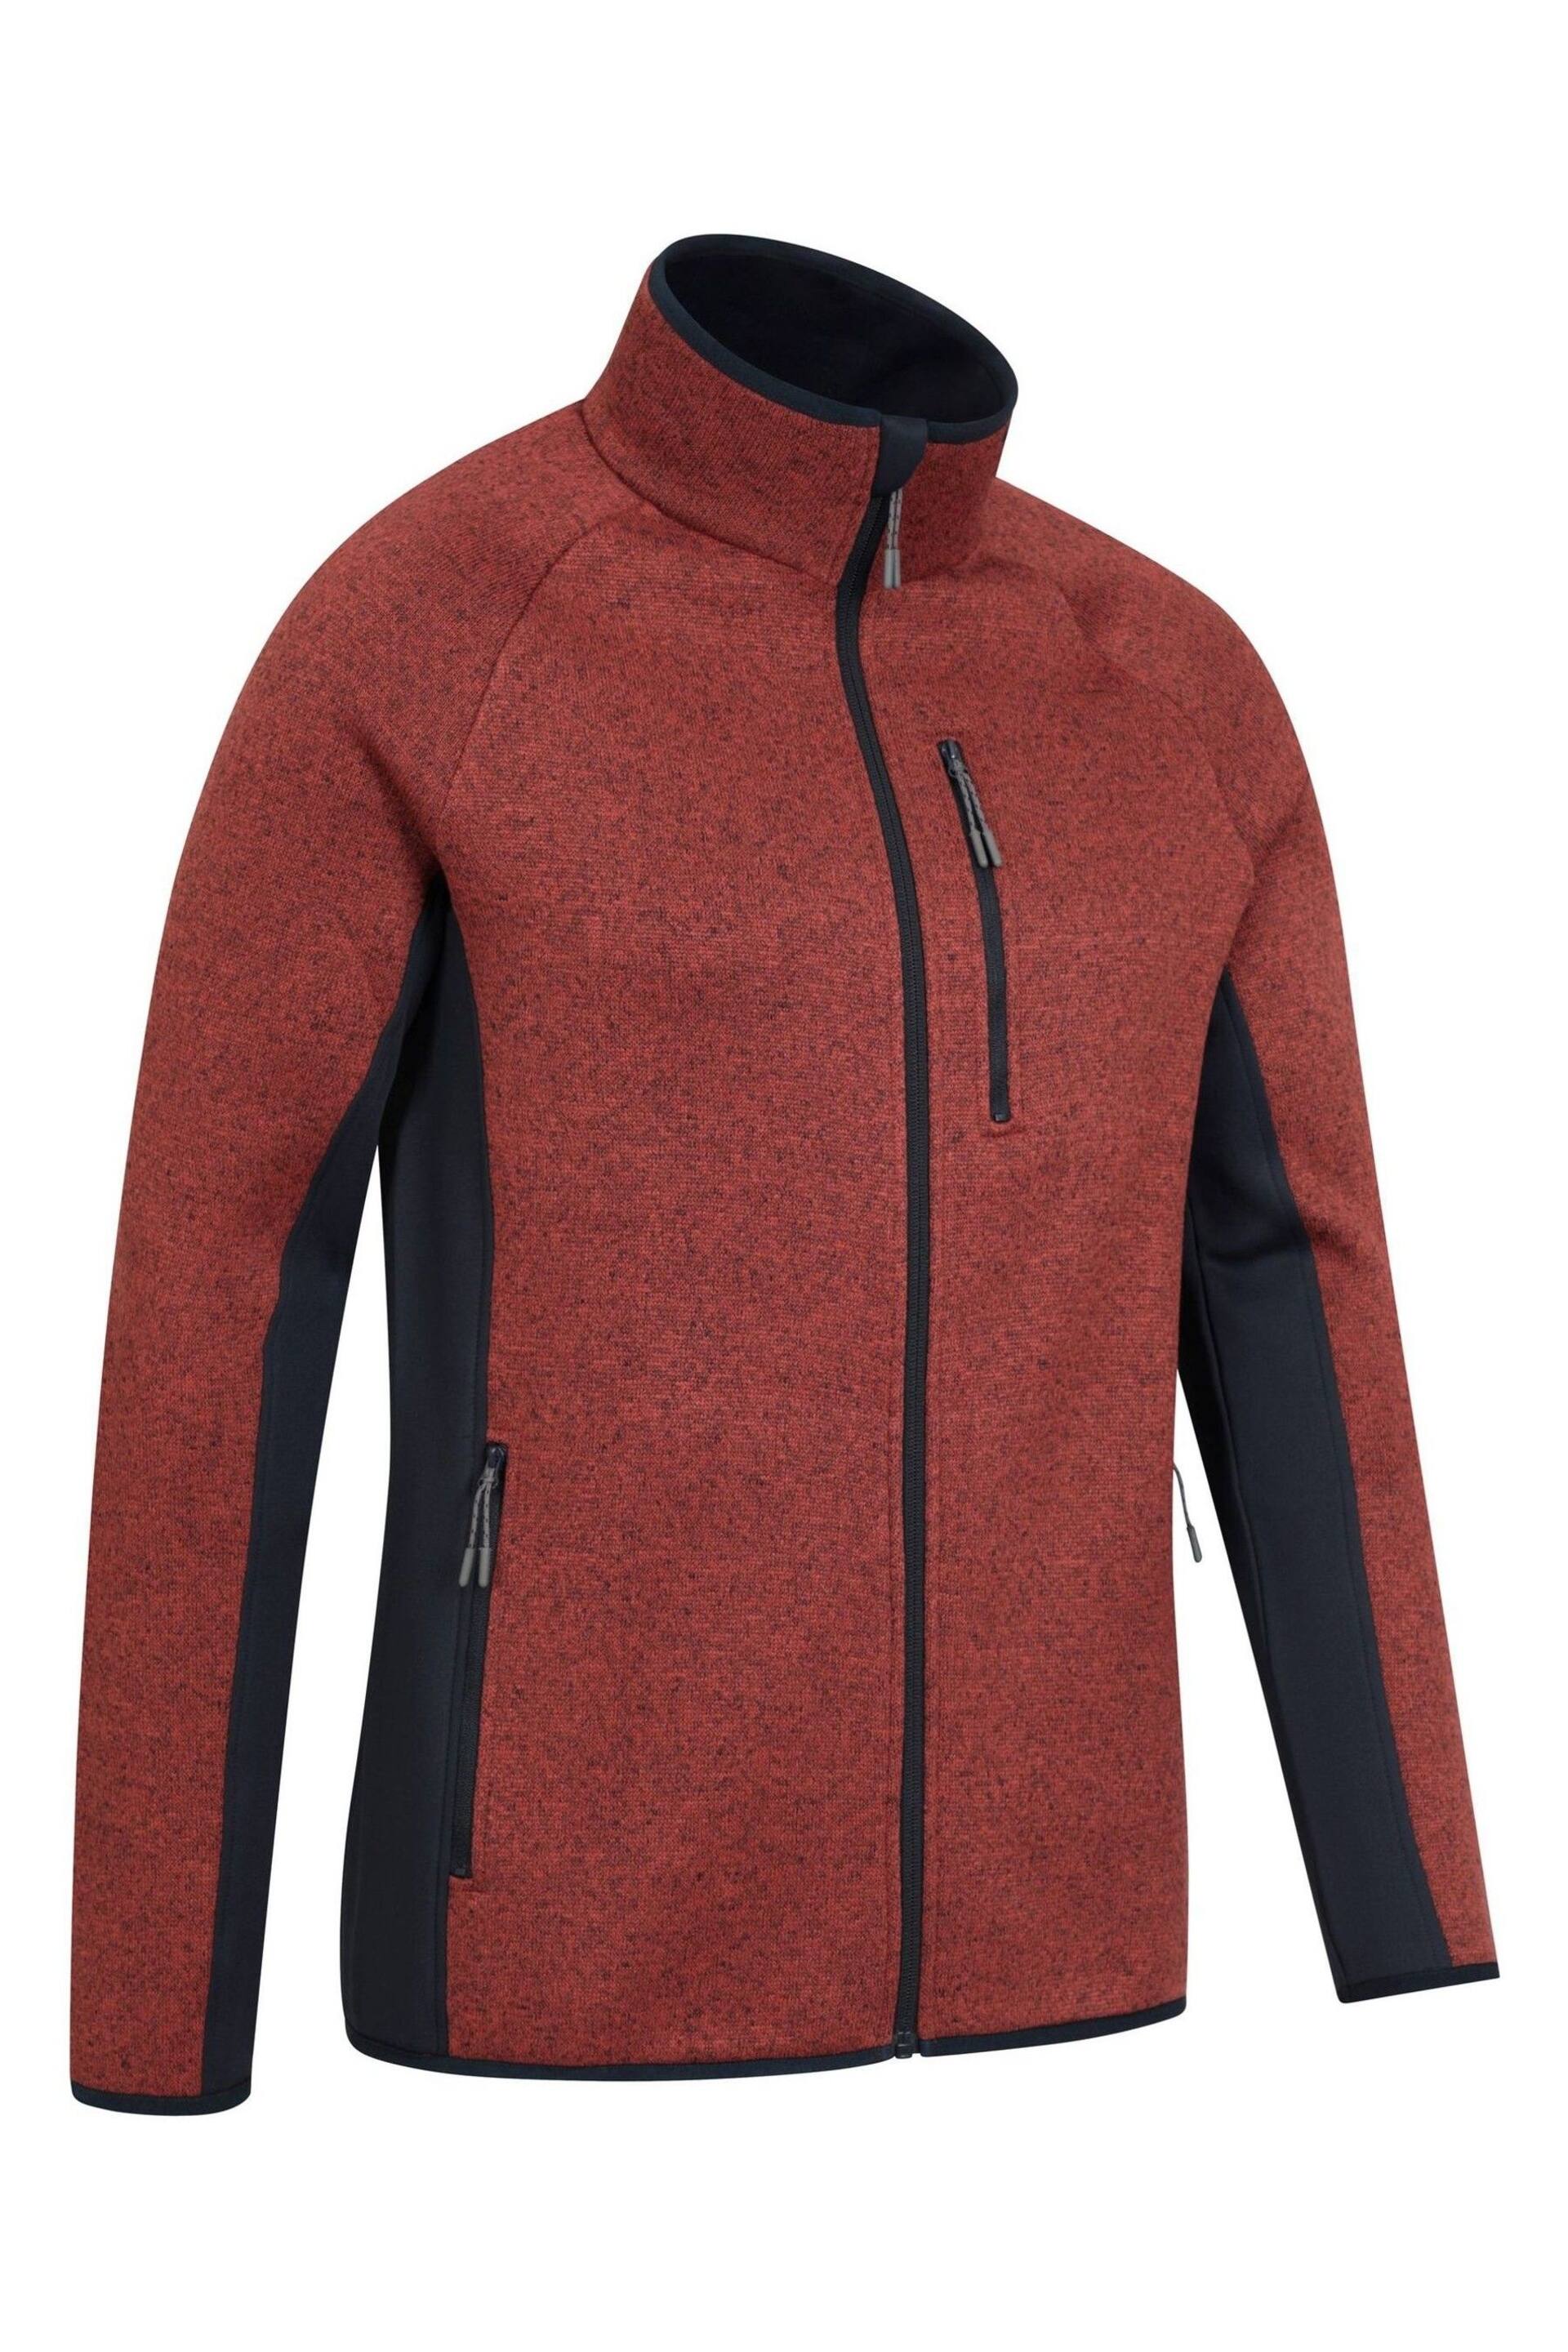 Mountain Warehouse Red Mens Treston Full Zip Fleece Jacket - Image 2 of 5